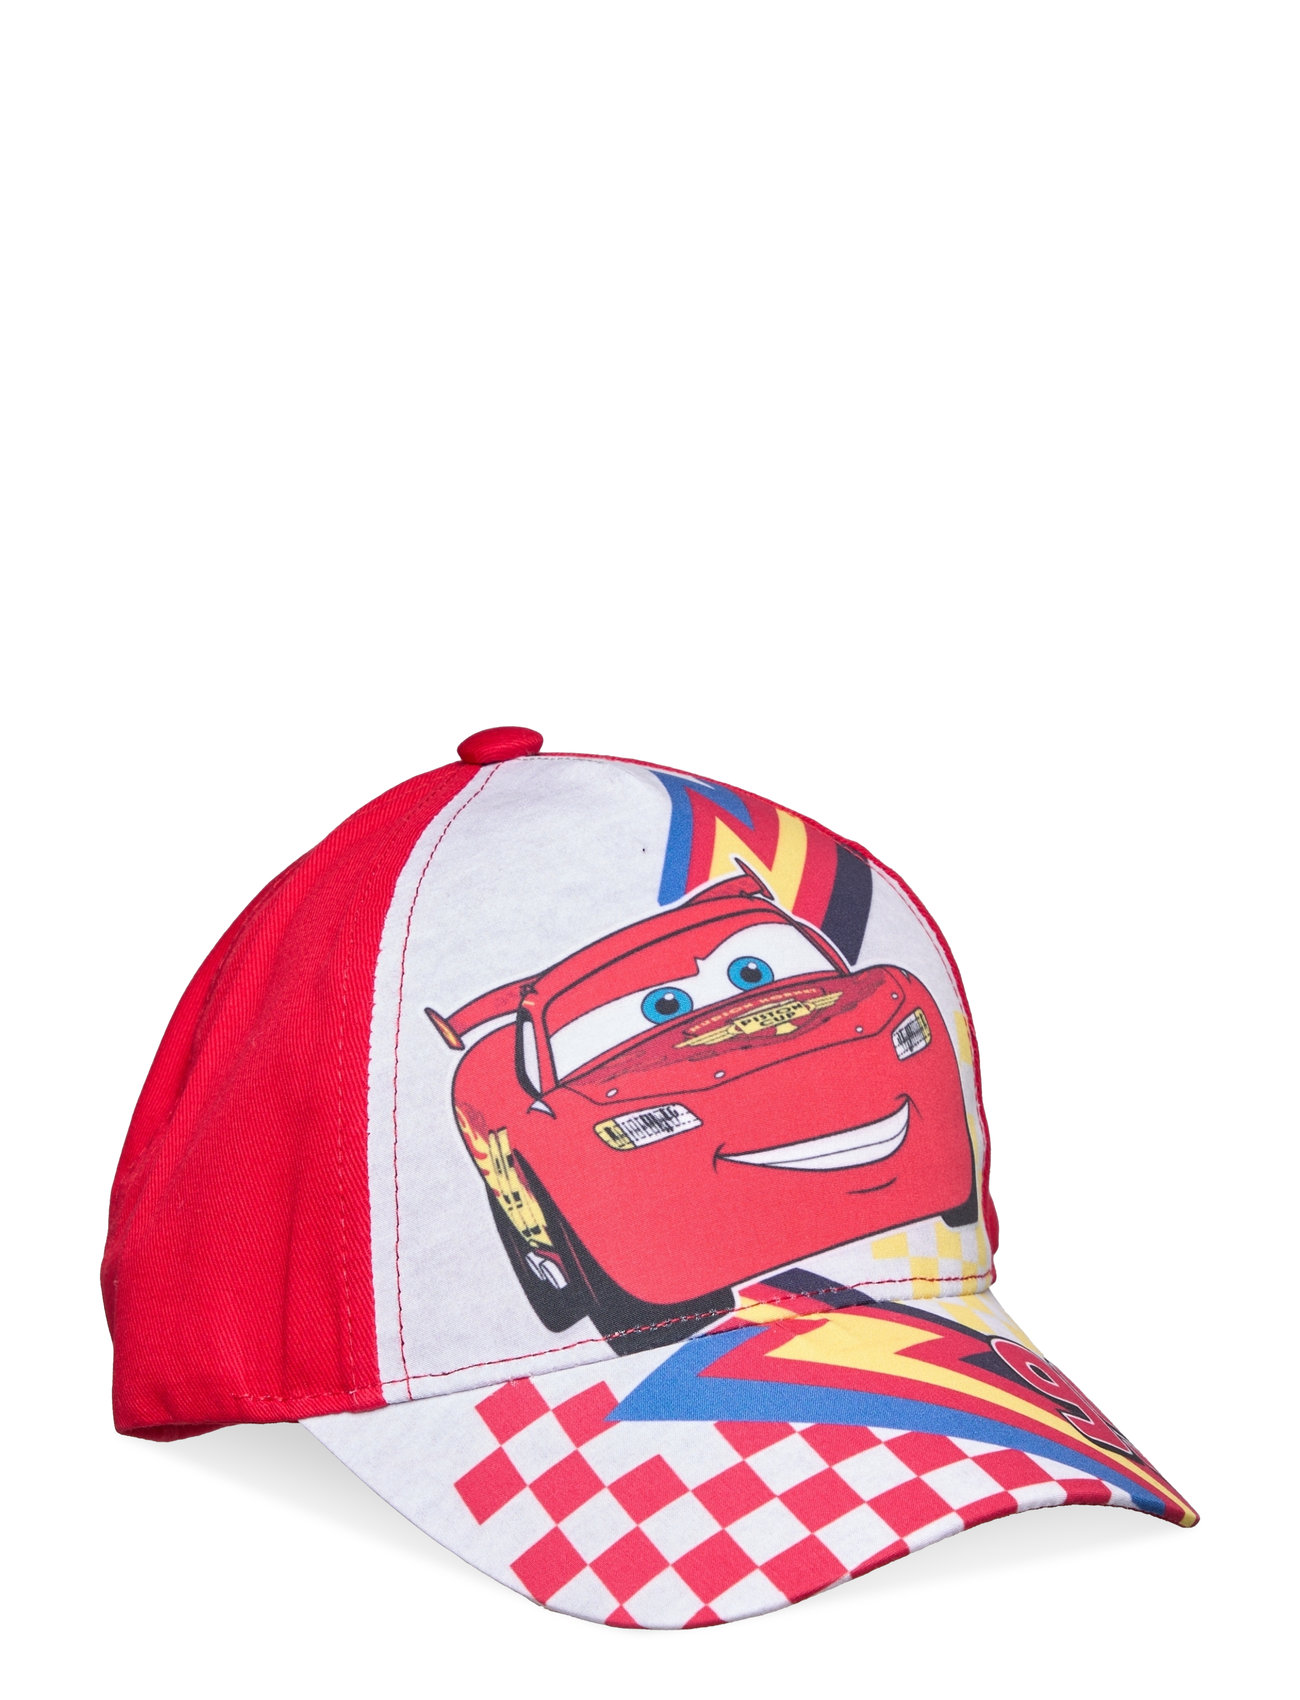 Cap In Sublimation Accessories Headwear Caps Red Biler